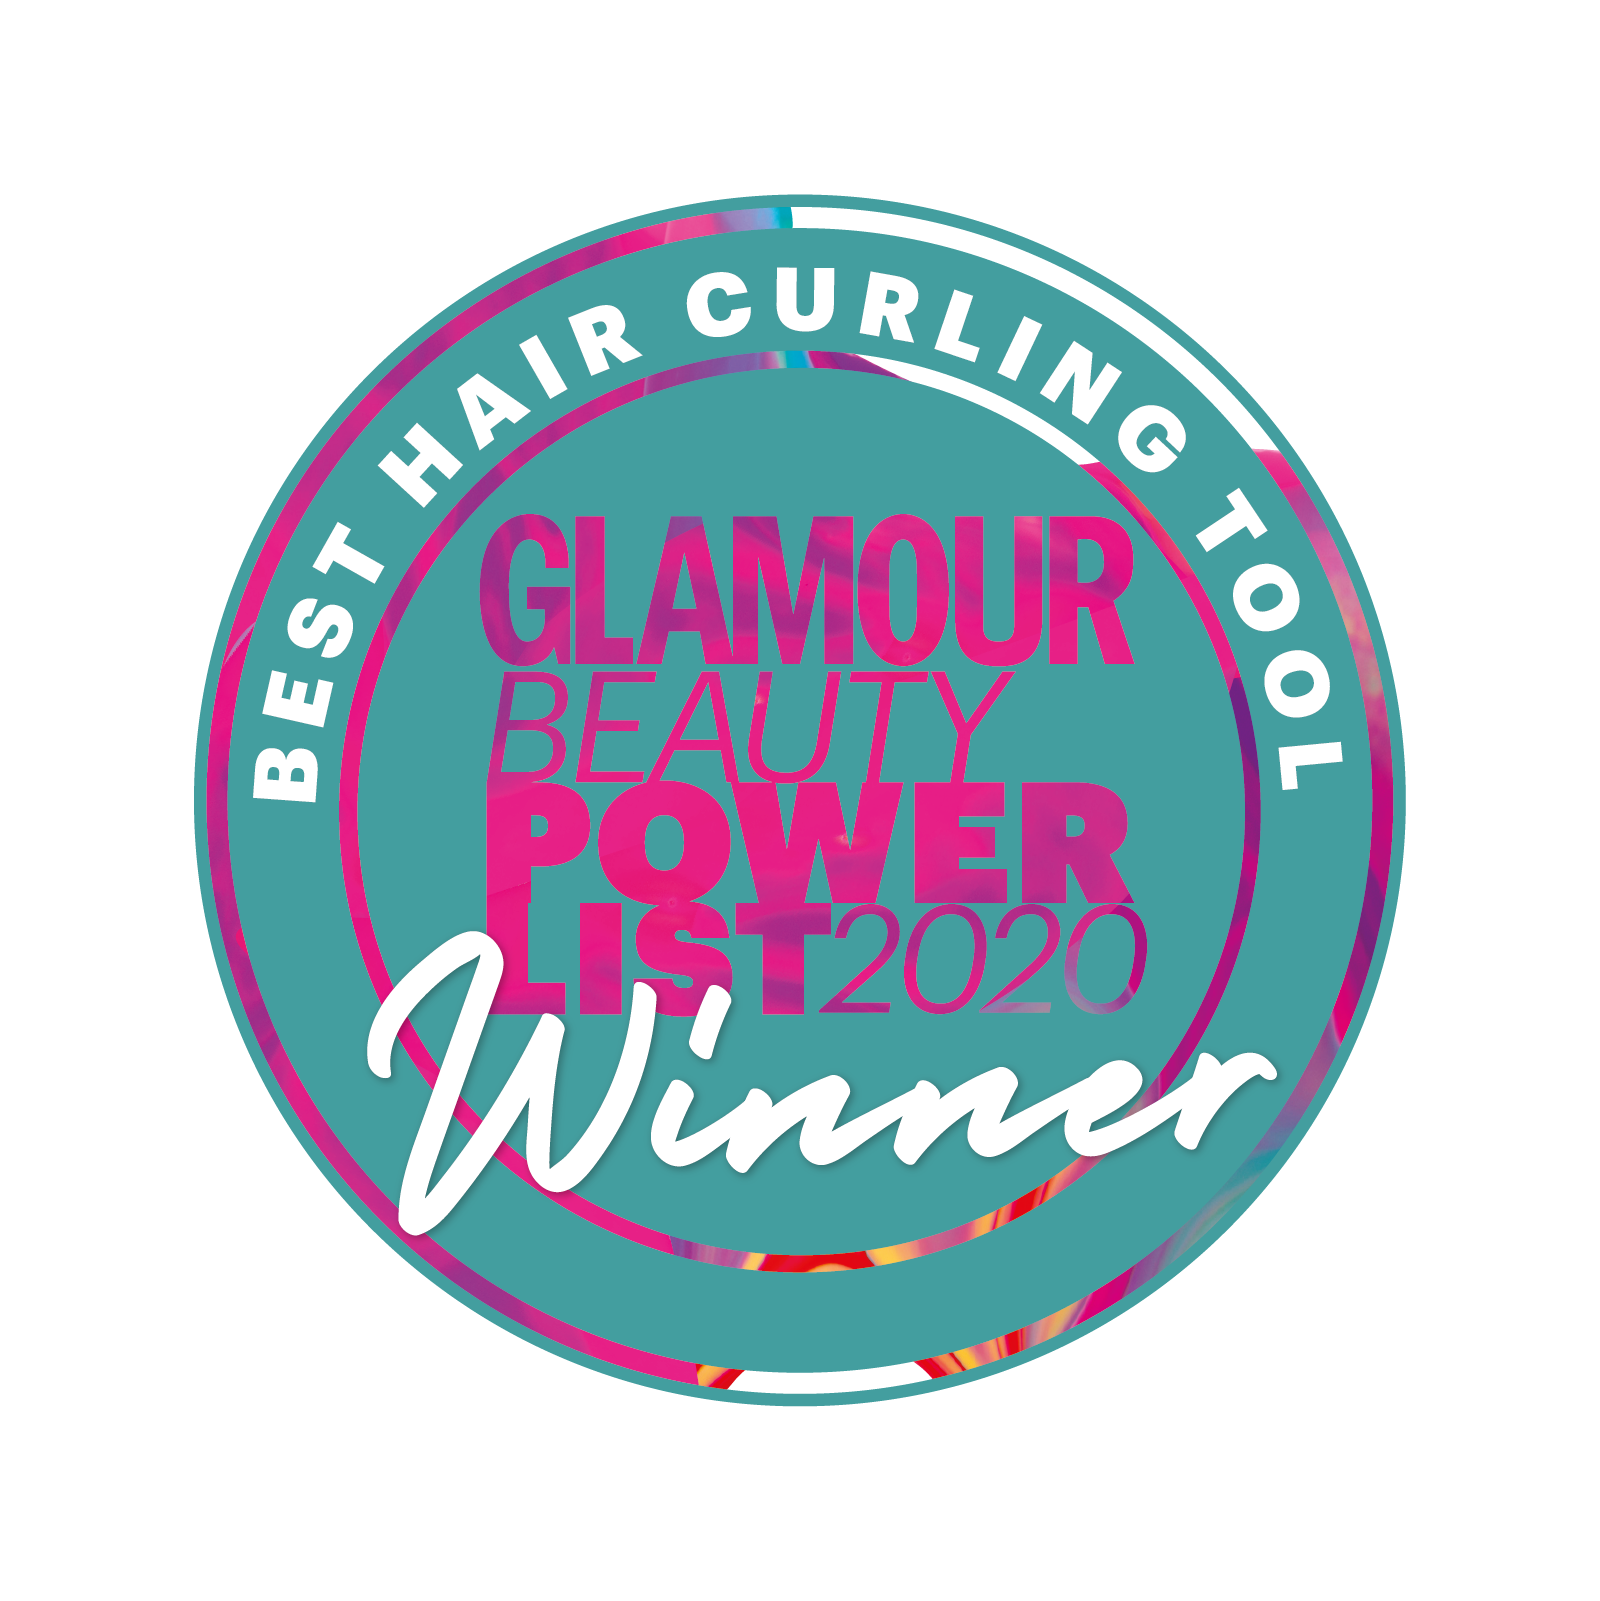 Glamour Beauty award logo